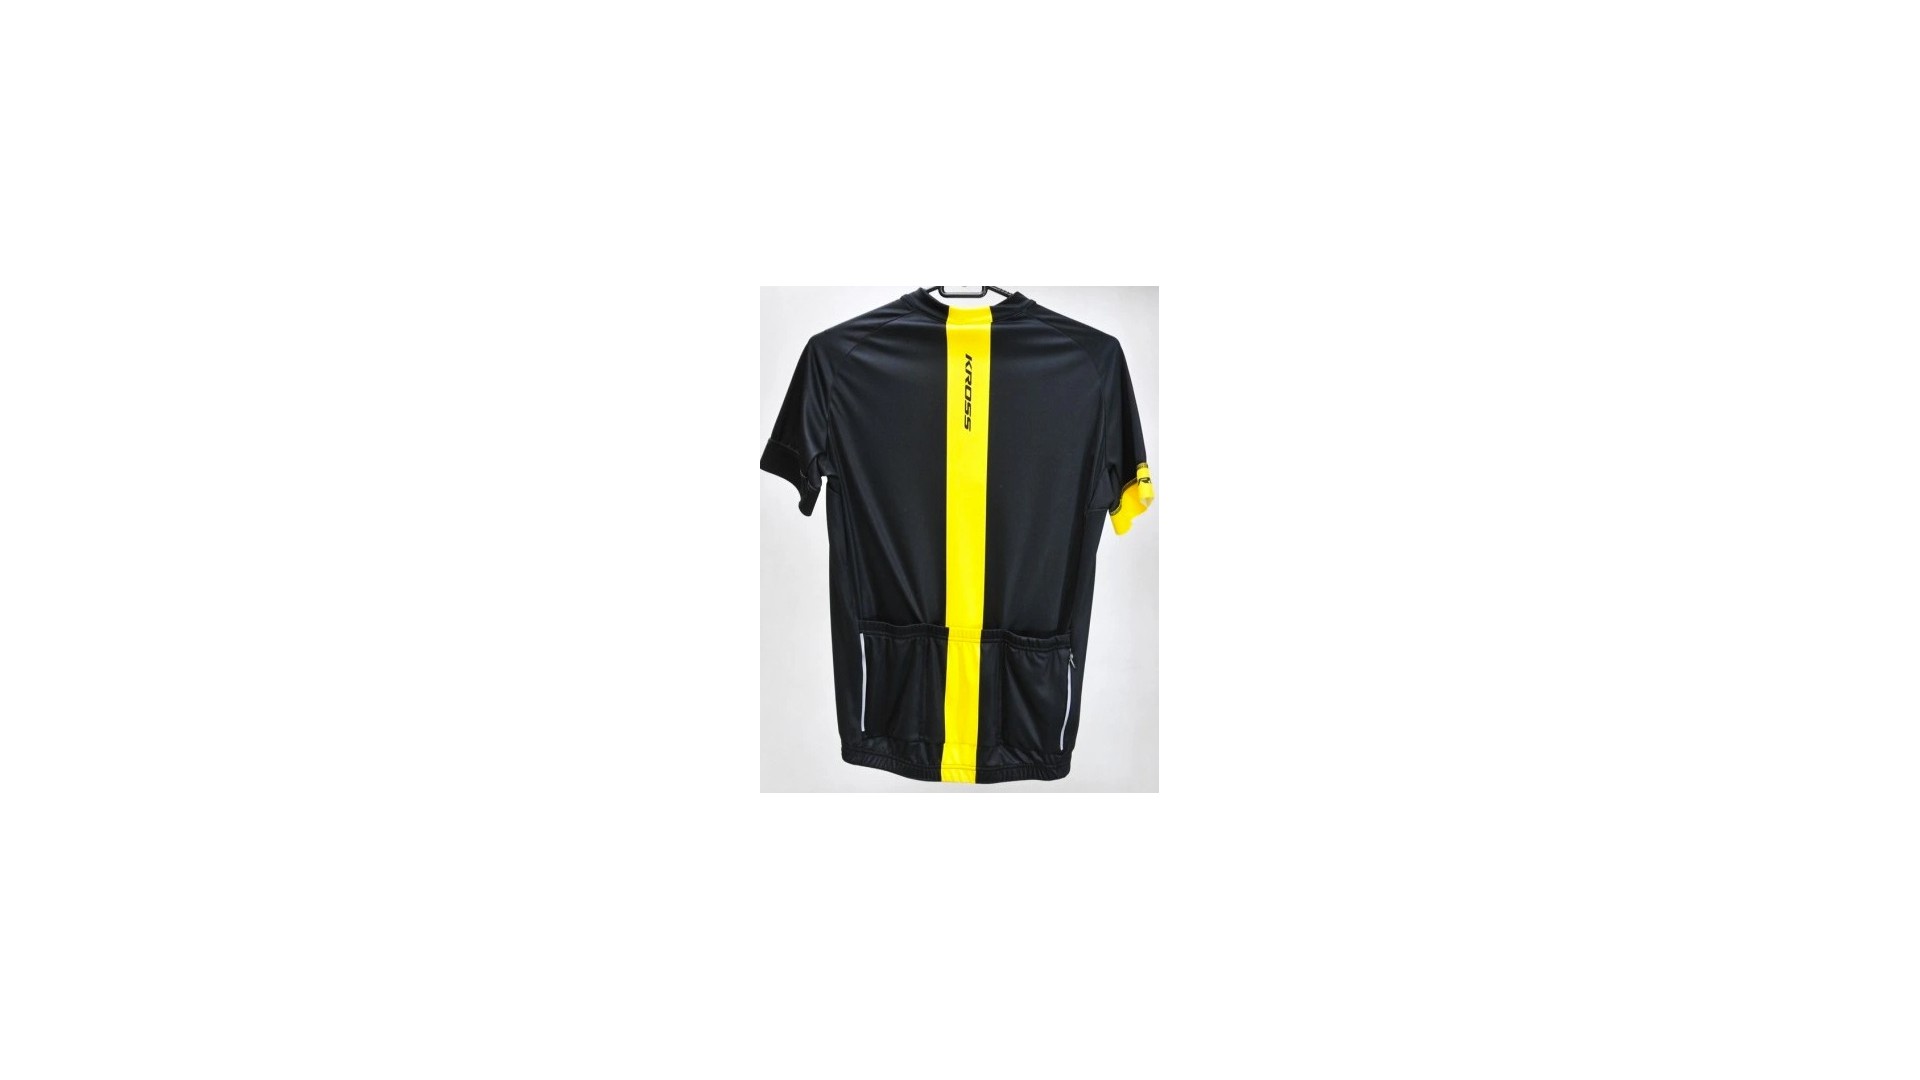 Koszulka na rower KROSS Pave czarno-żółta  r.S - T4COD000011SBKYL